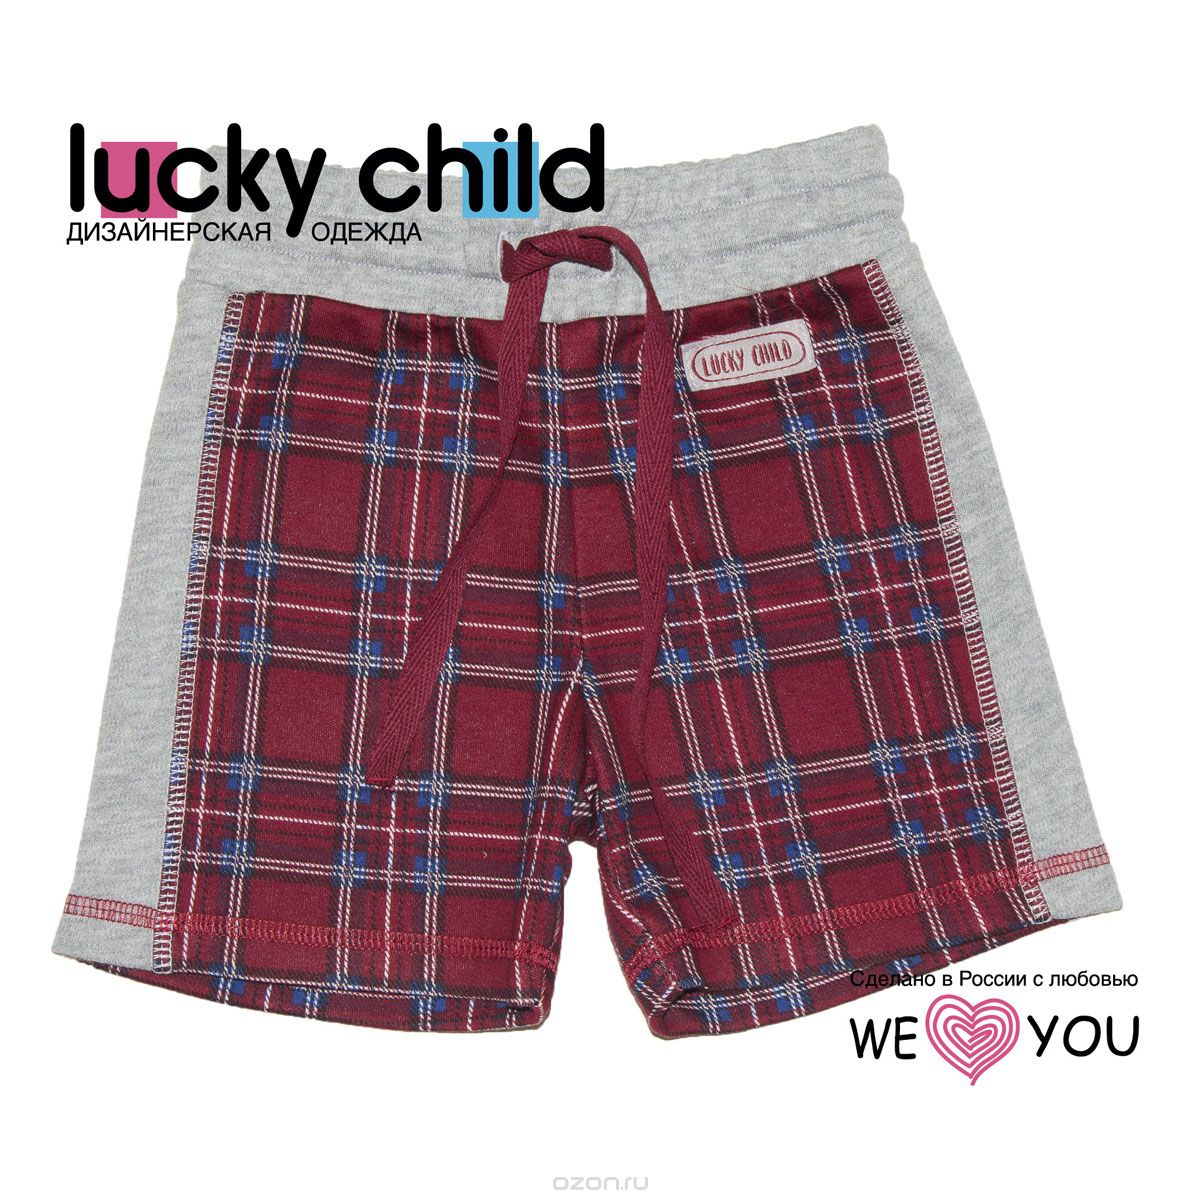    Lucky Child: , , : , . 13-410.  116/122